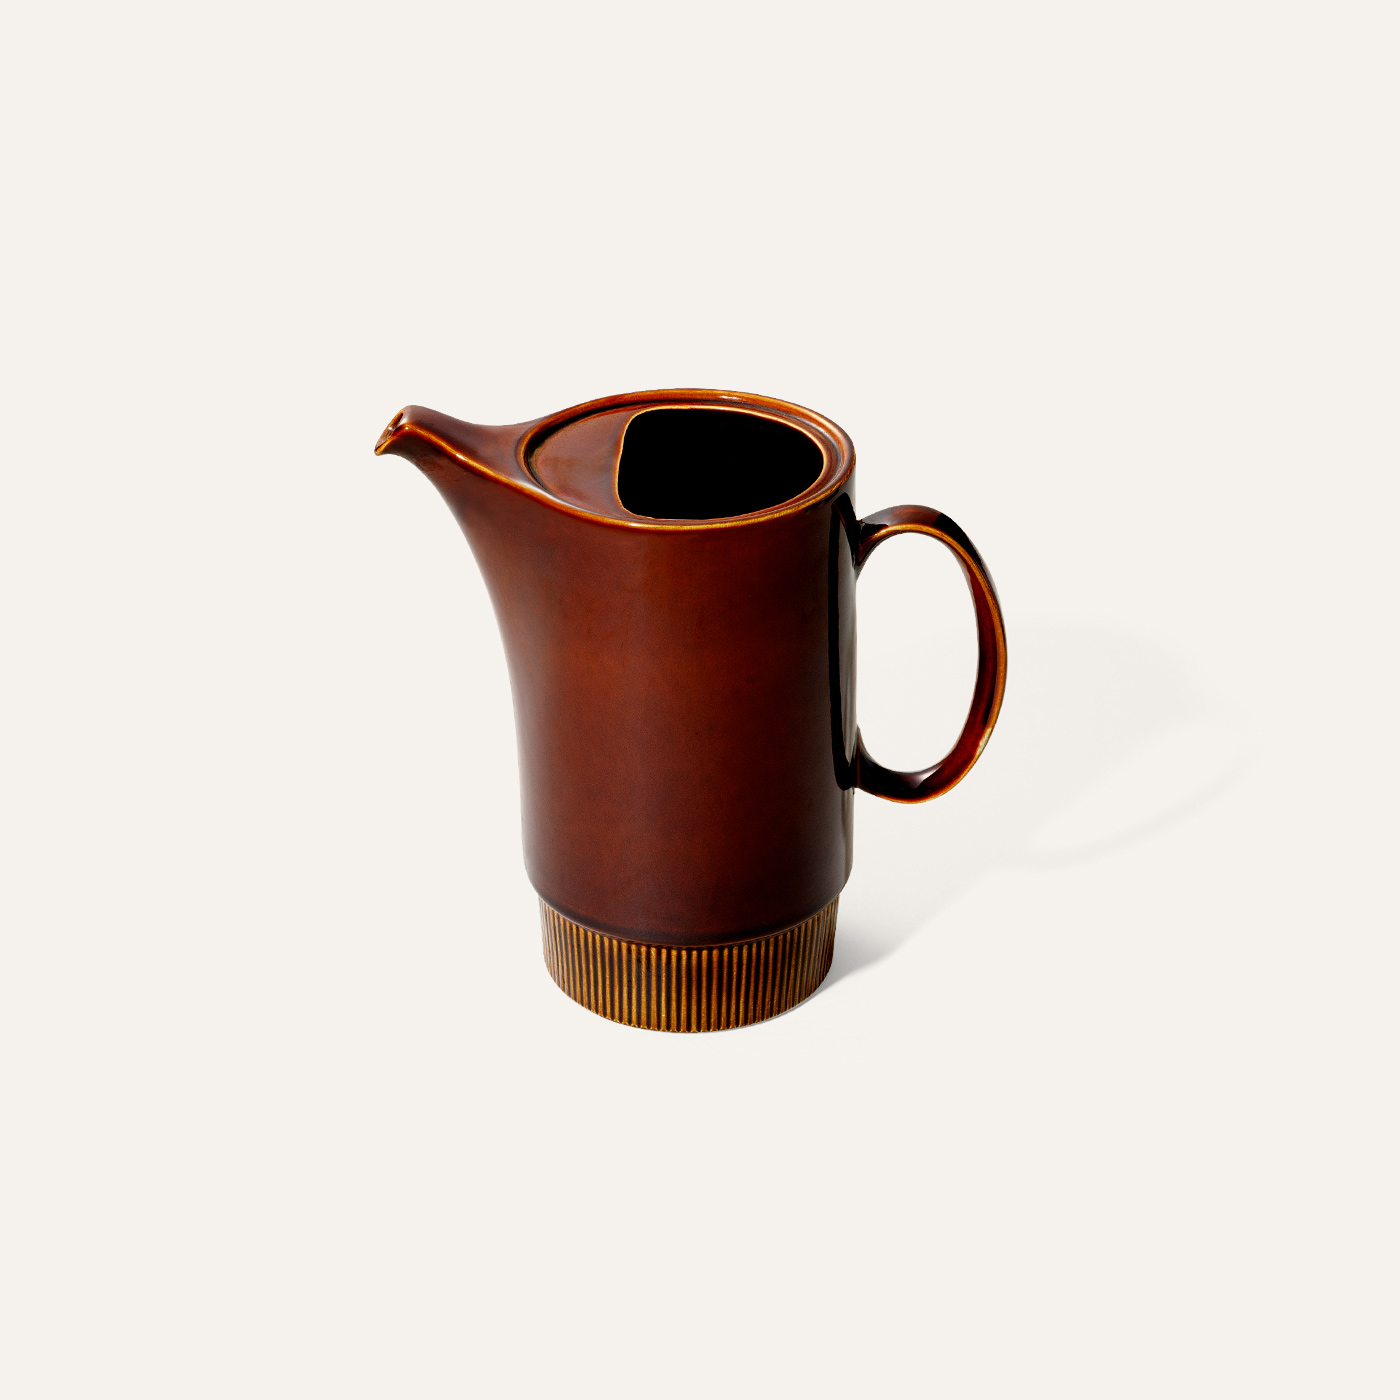 Chestnut coffee pot